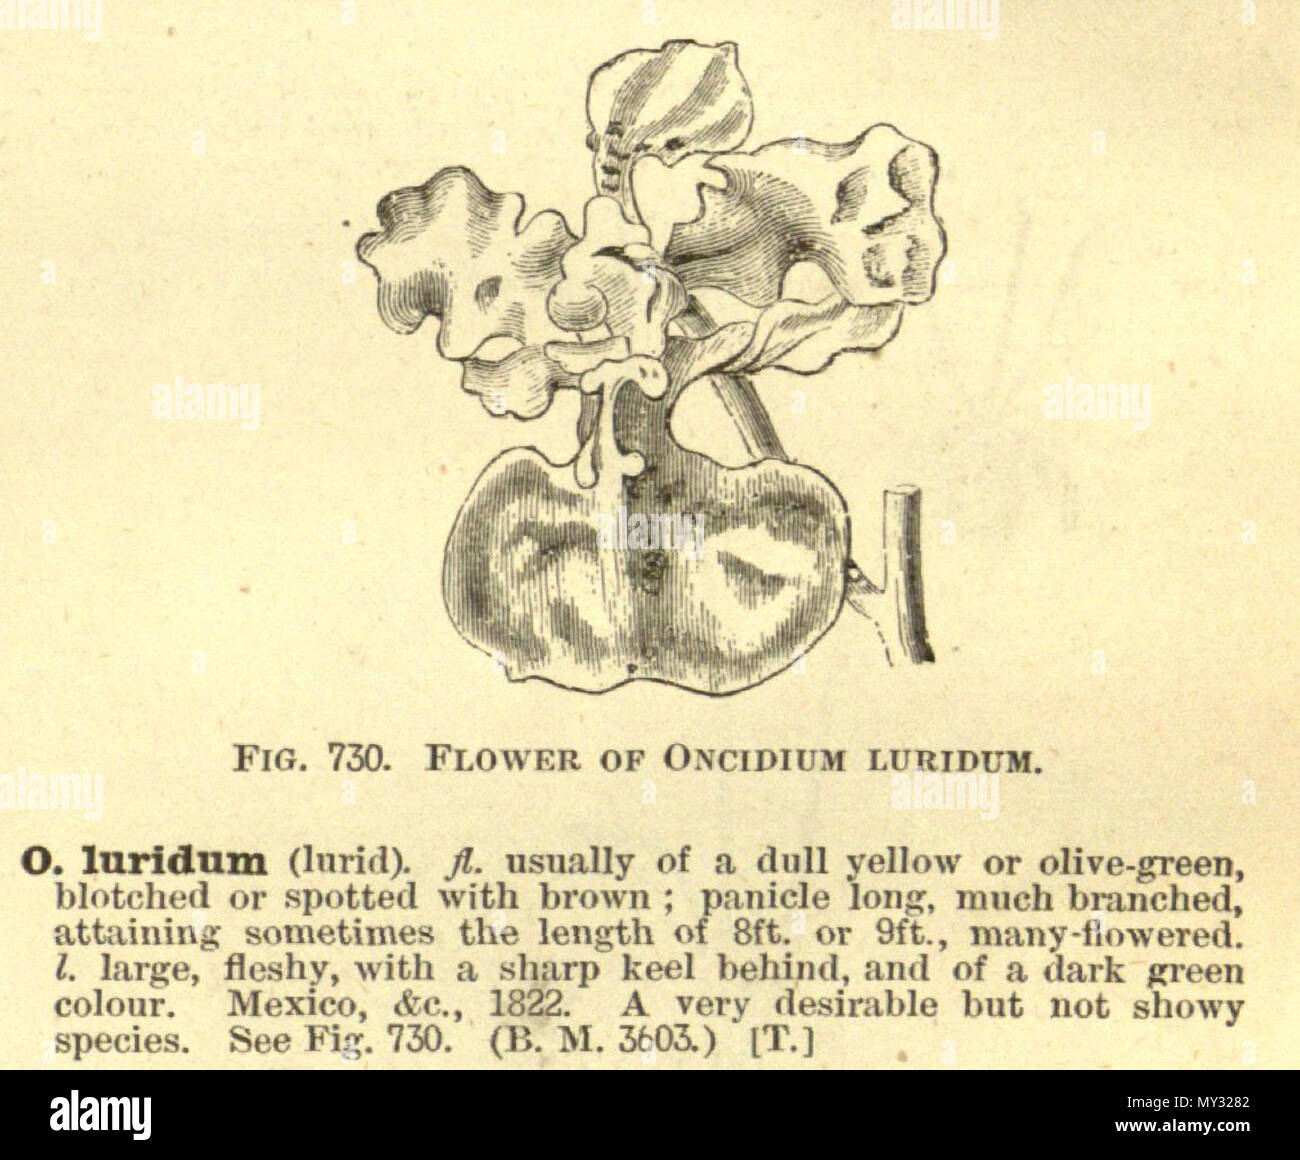 . Illustration of: Oncidium luridum . between 1884 and 1888. Edited by George Nicholson 398 Oncidium luridum - cutout from Enc.Hort.5-487 (1884-1888) Stock Photo